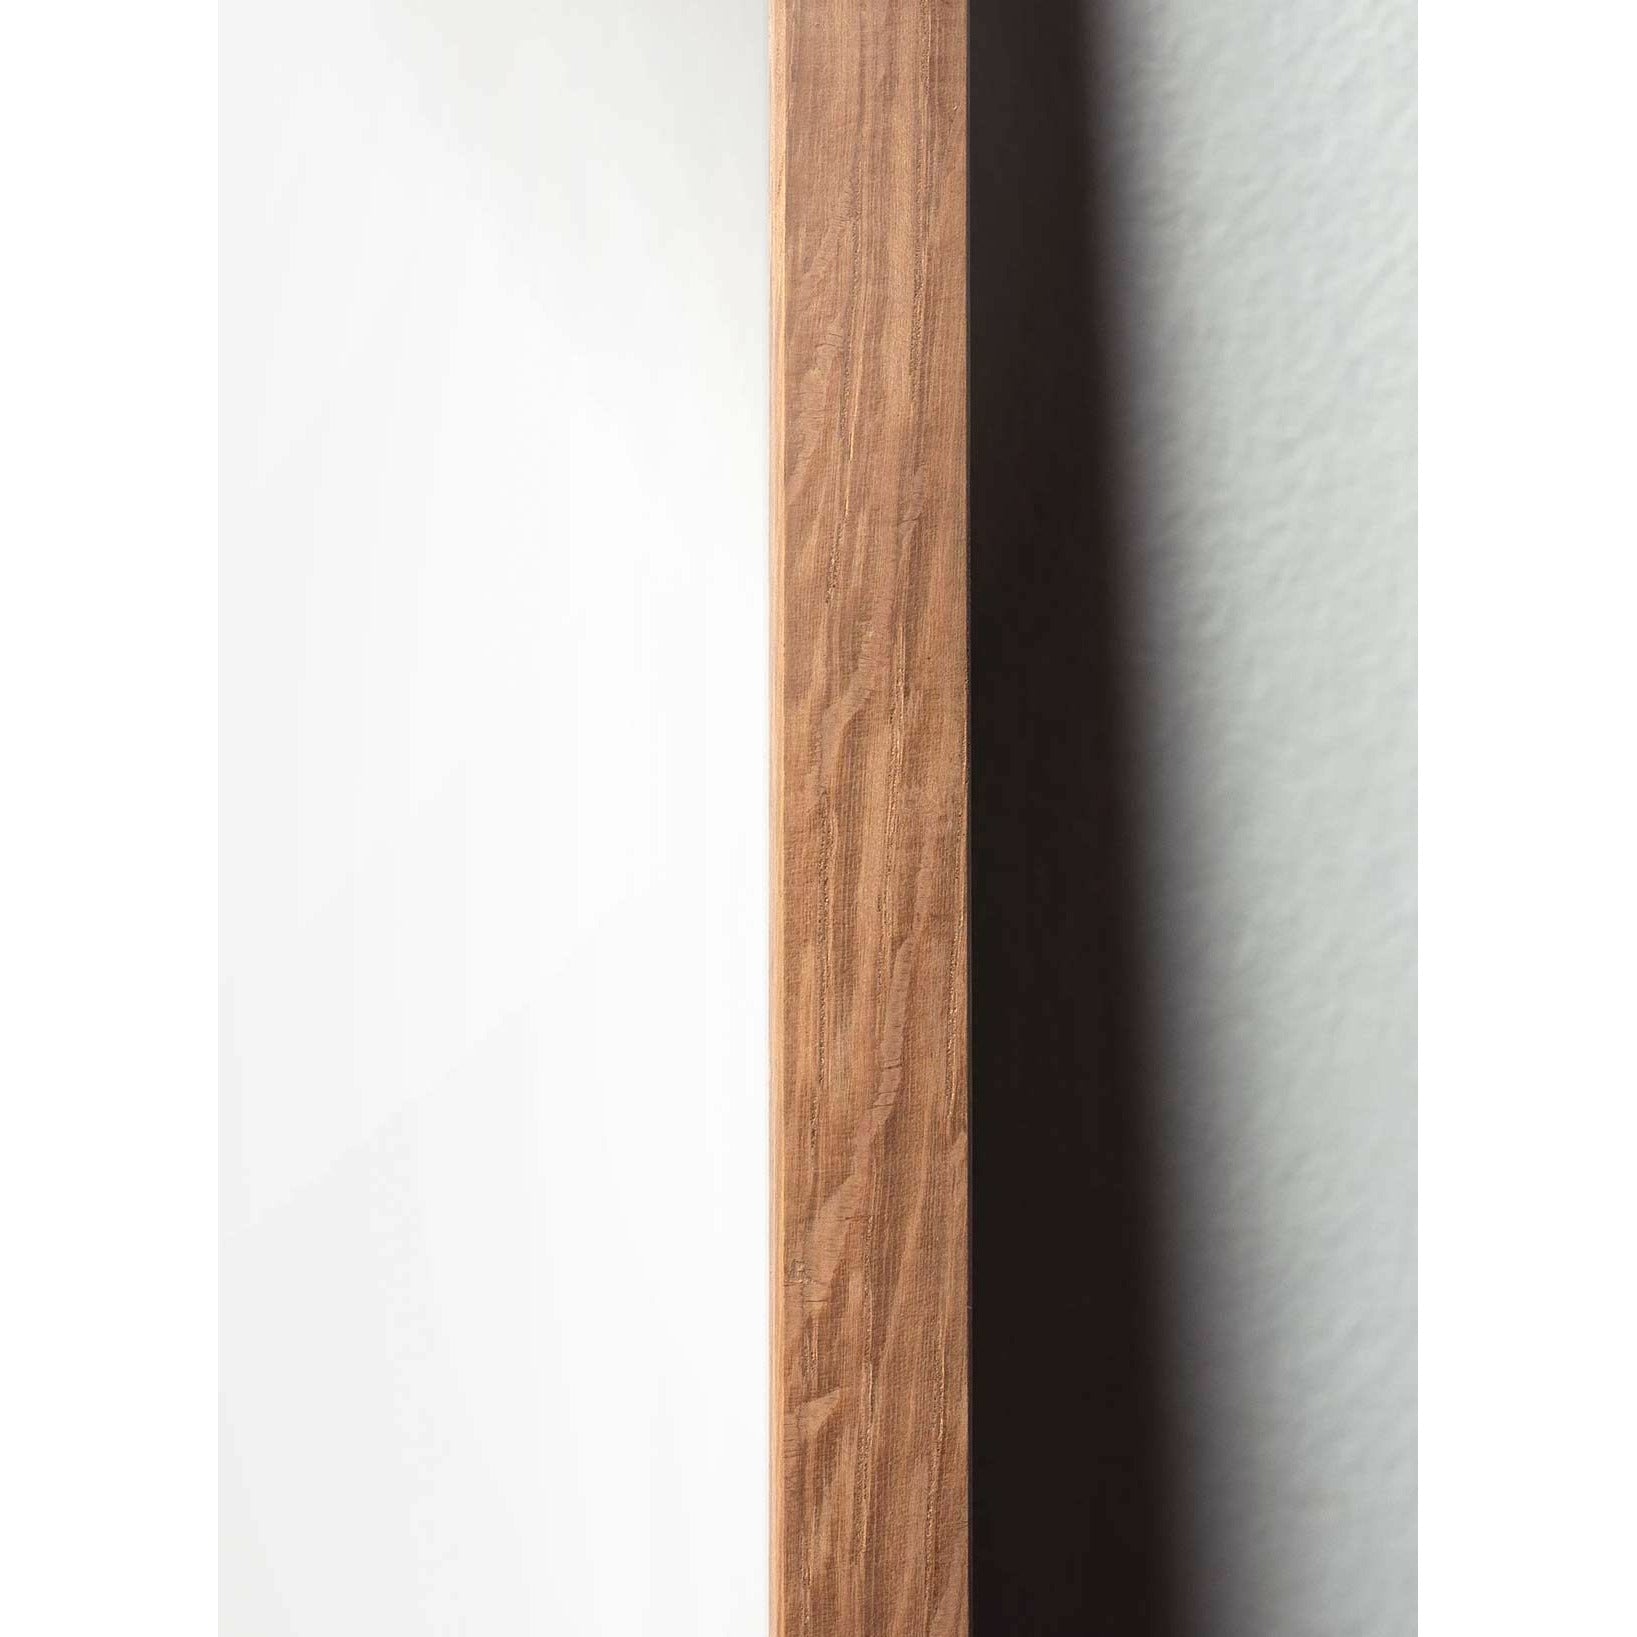 Póster clásico de BrainChild Teddy Bear, marco hecho de madera clara de 70x100 cm, fondo de color arena